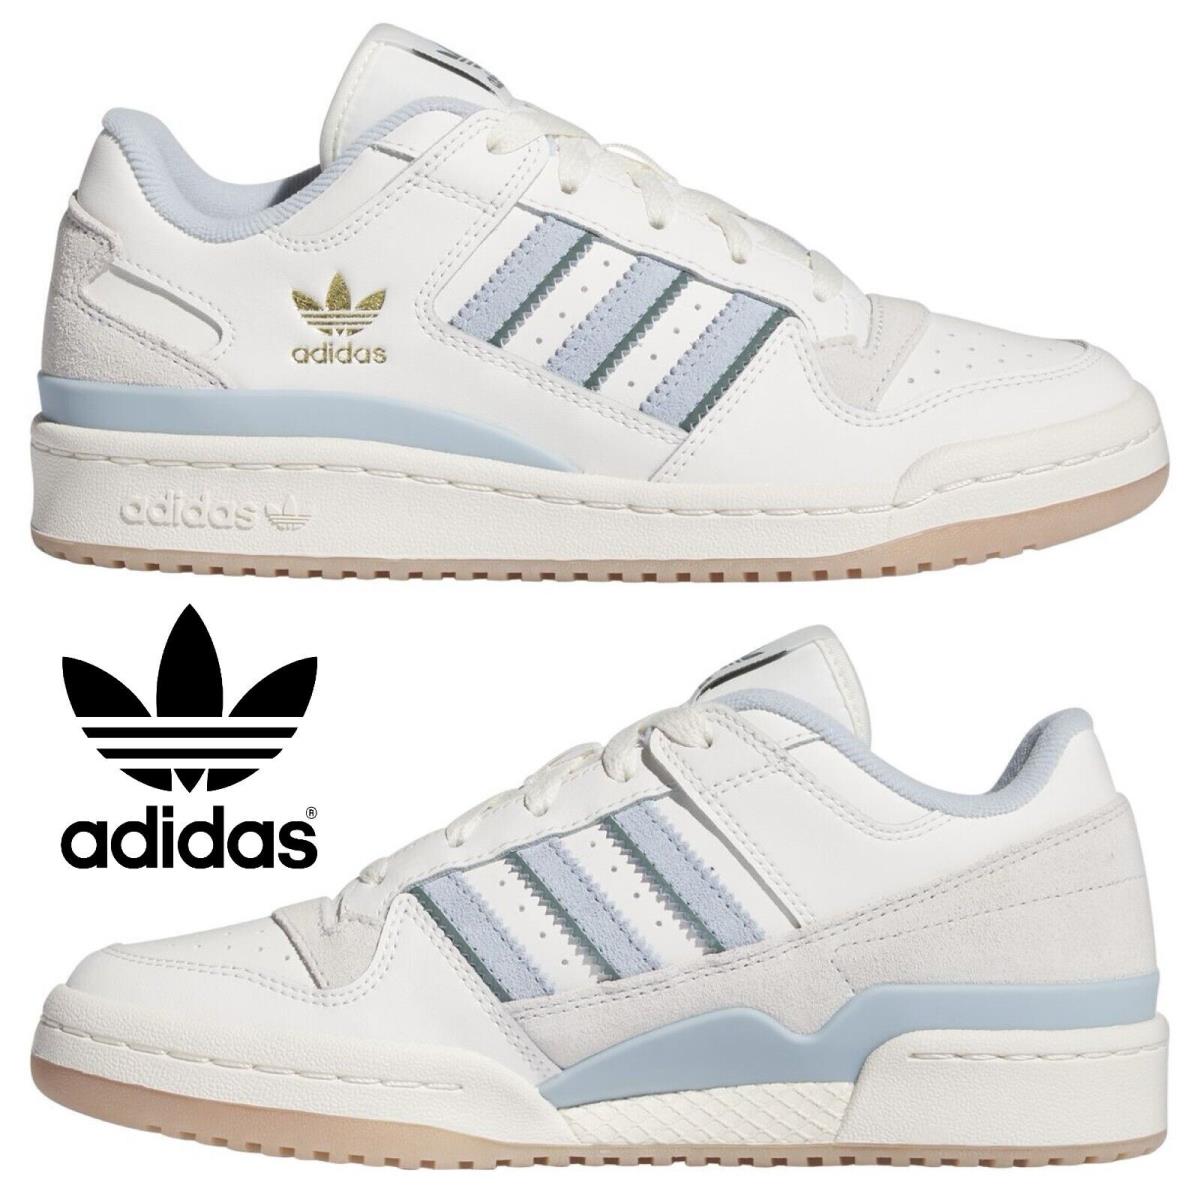 Adidas Originals Forum Low Women`s Sneakers Comfort Walking Casual Shoes White - White, Manufacturer: Cloud White/Wonder Blue/Cream White